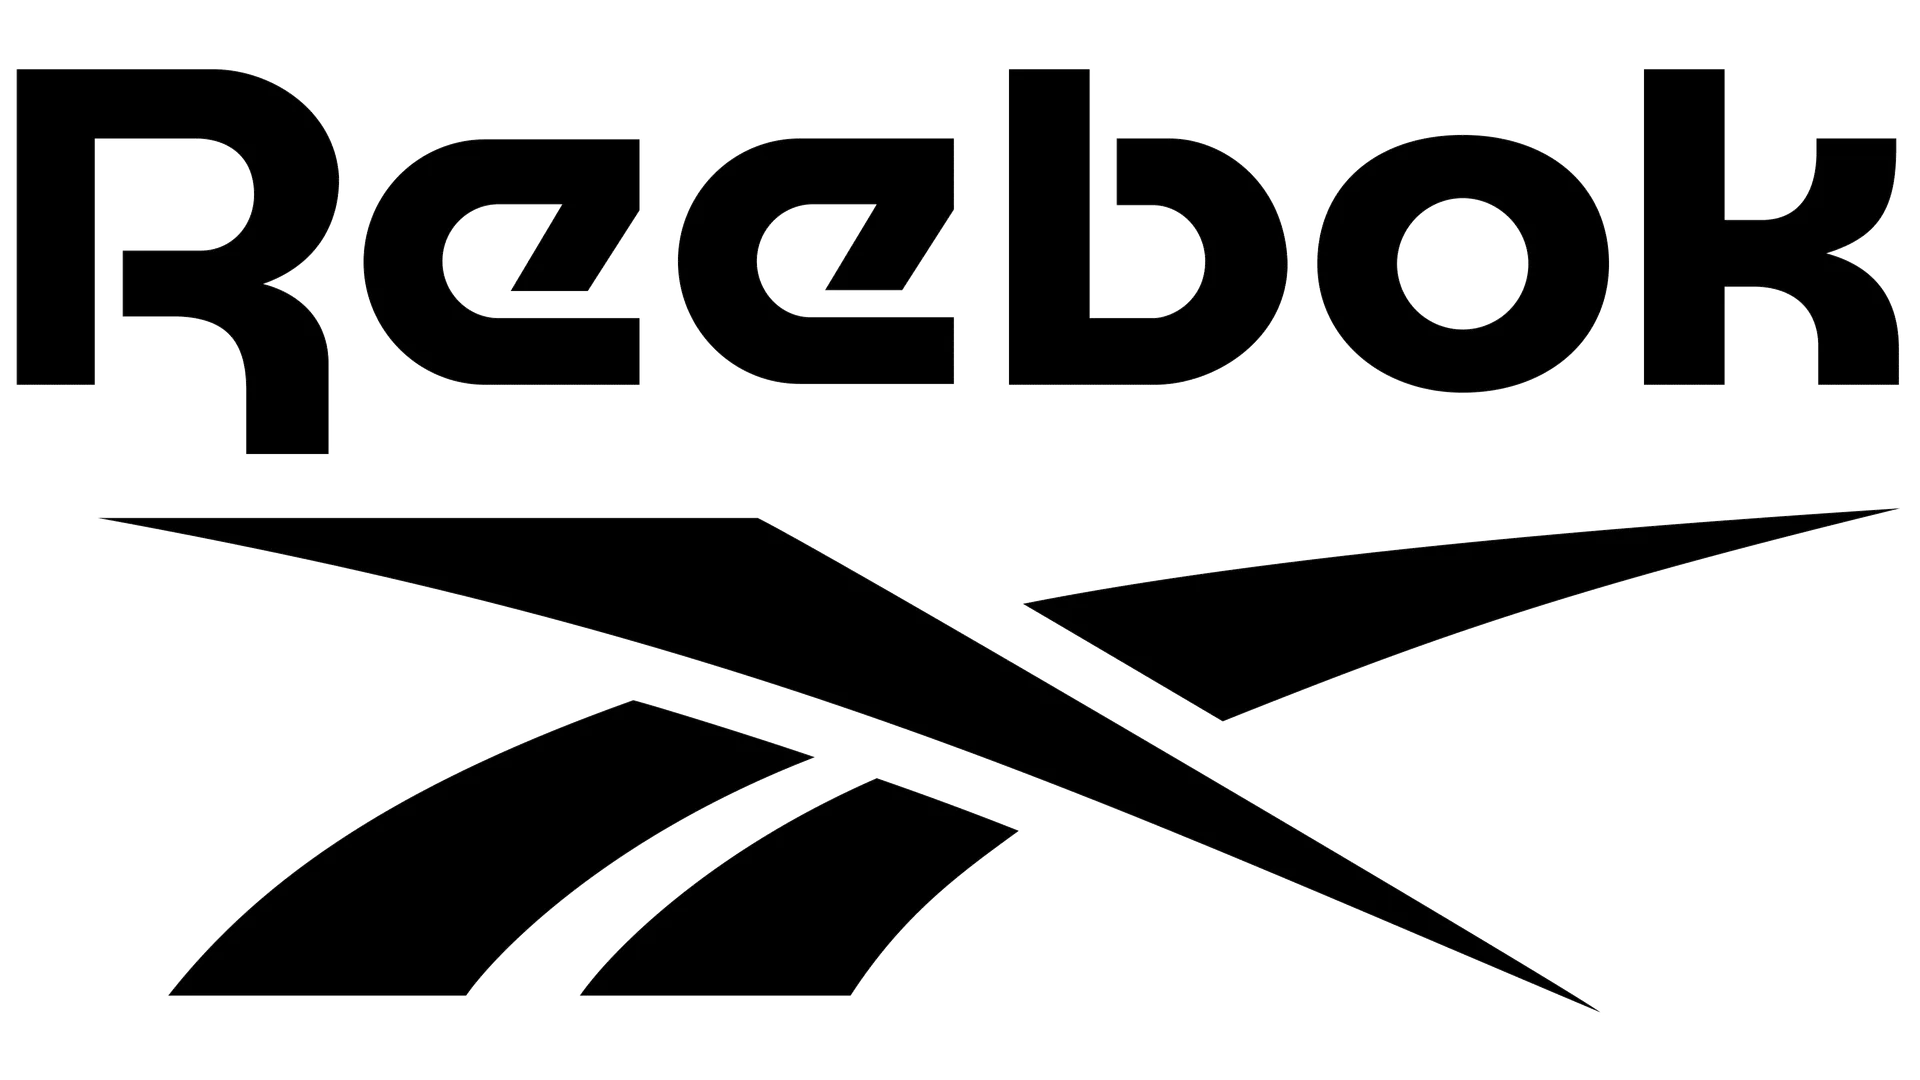 REEBOK logo